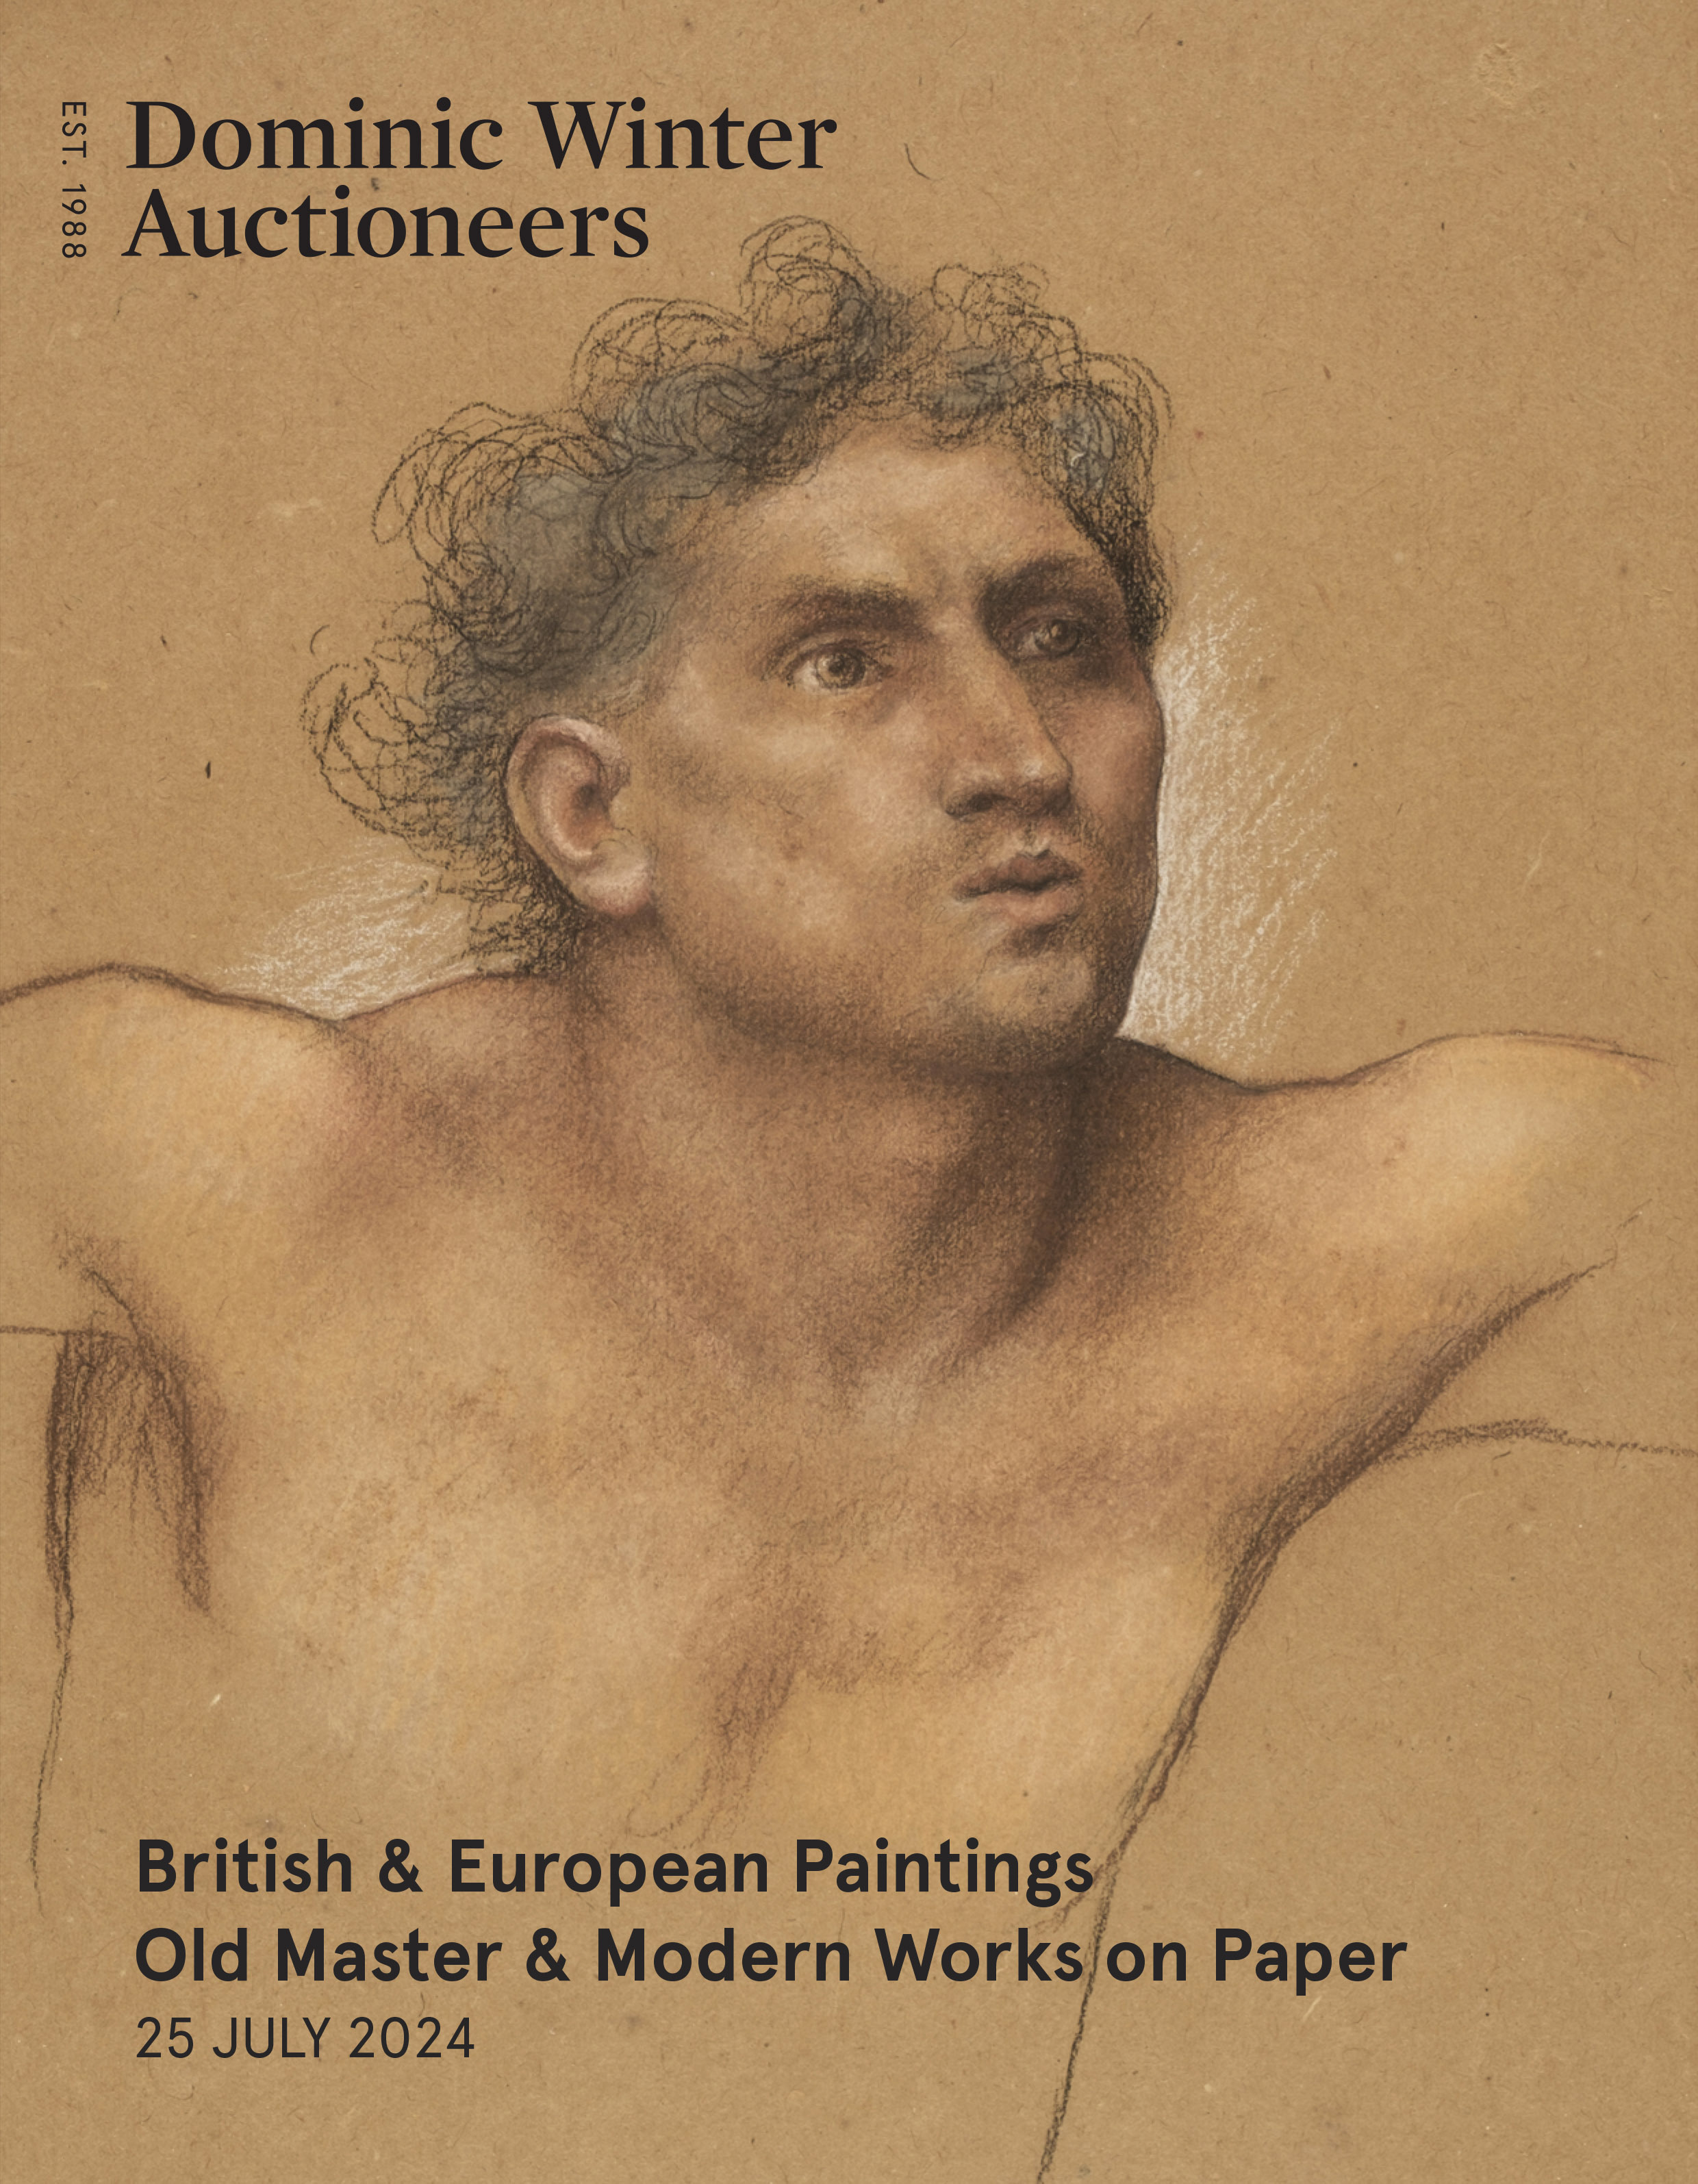 British & European Paintings, Old Master & Modern Works on Paper